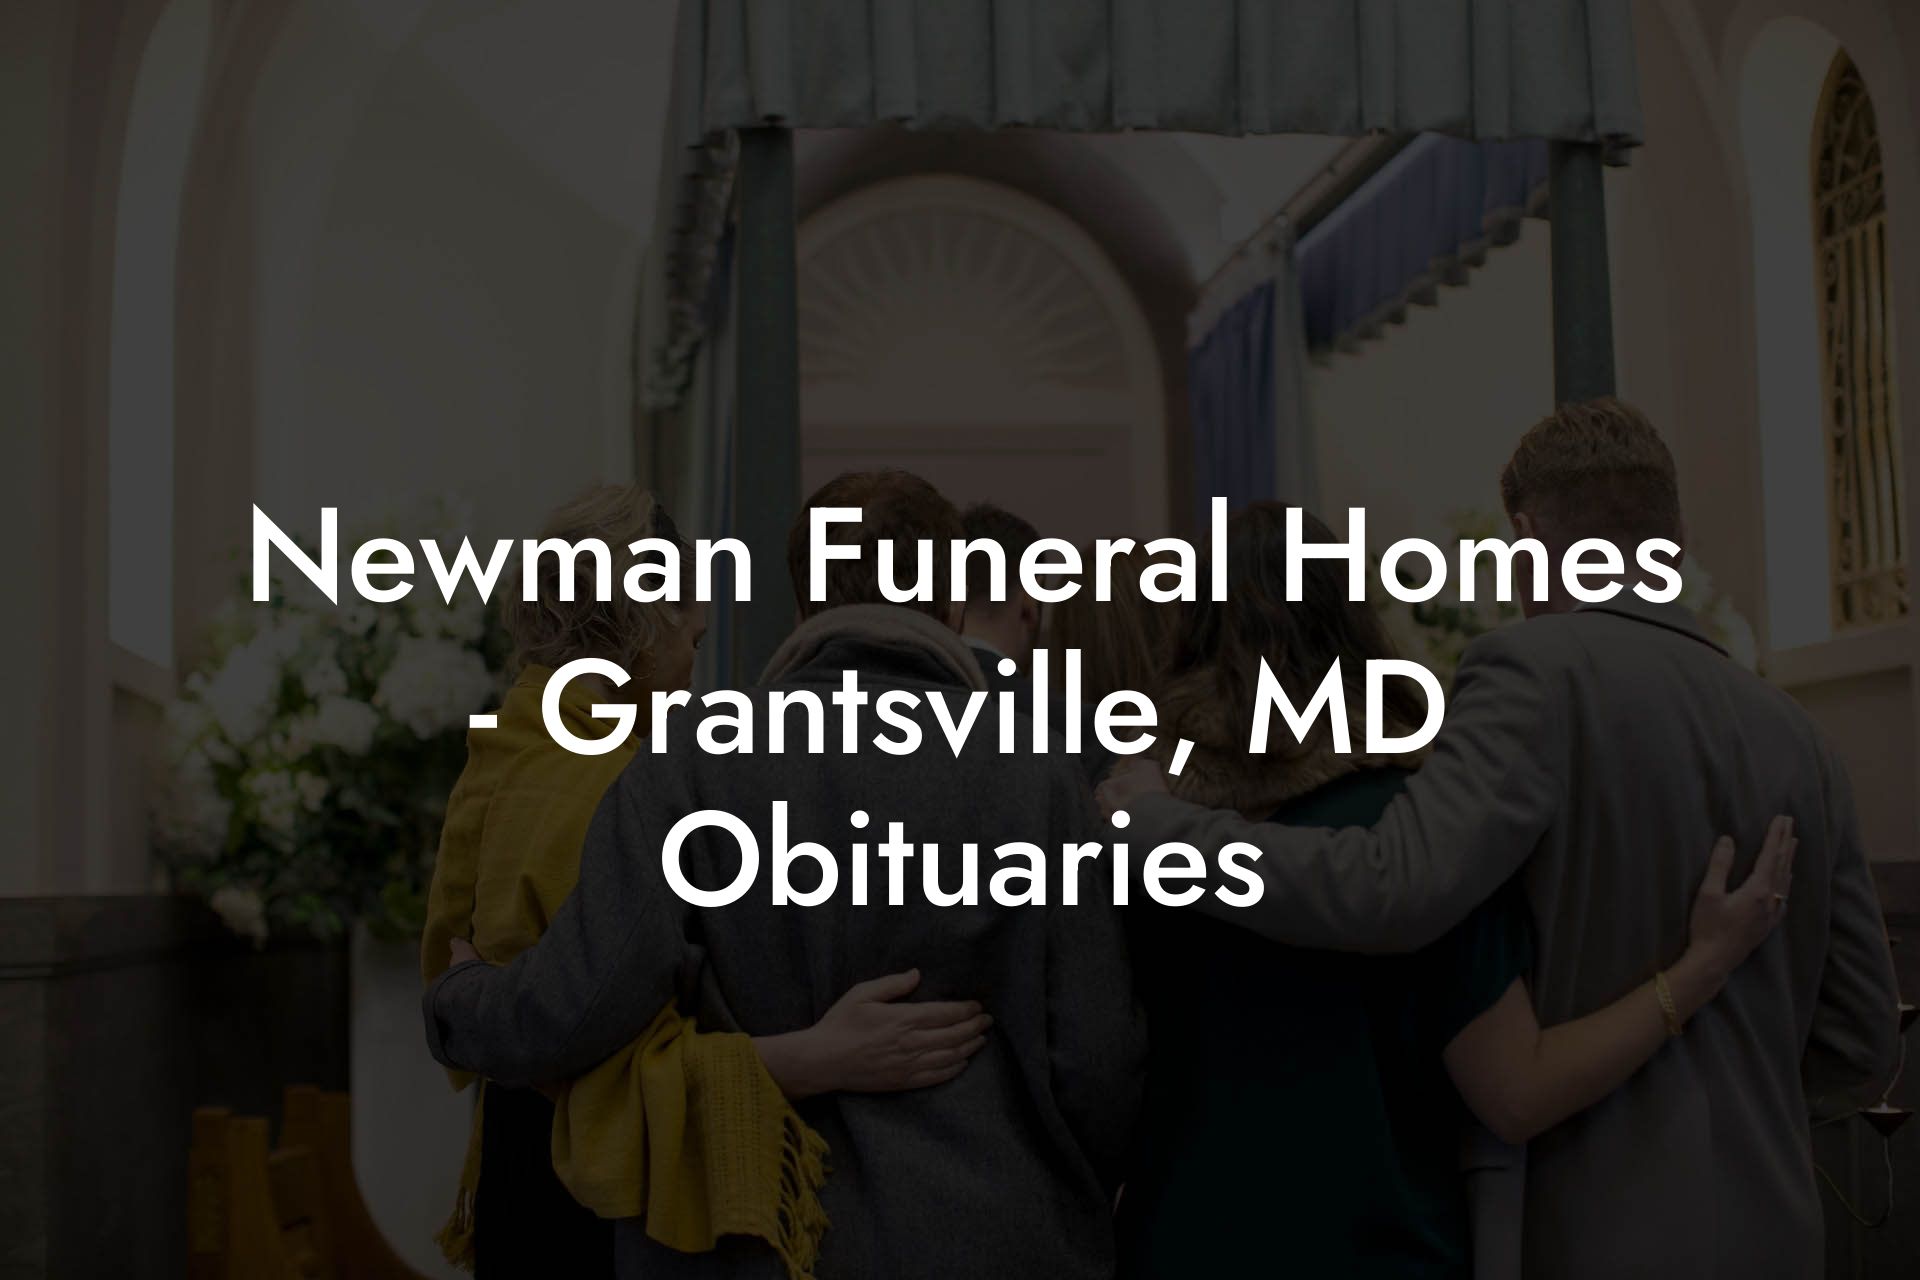 Newman Funeral Homes - Grantsville, MD Obituaries